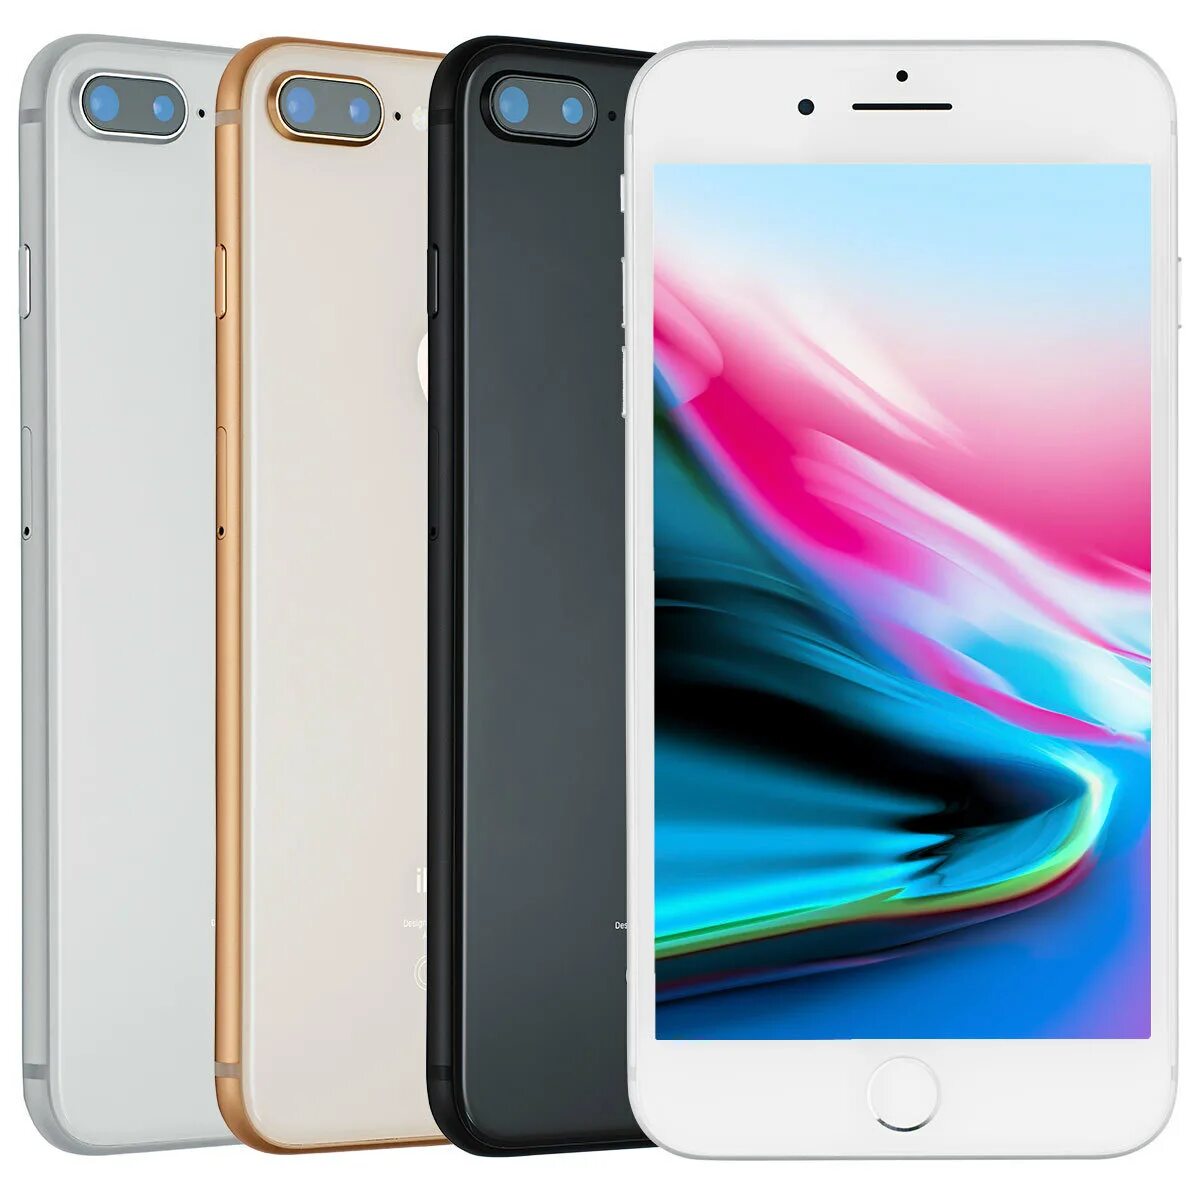 Цена айфона 8 10. Apple iphone 8 Plus. Iphone 8 Plus 64gb. Apple iphone 8 Plus 256gb. Apple iphone 8 Plus цвета.